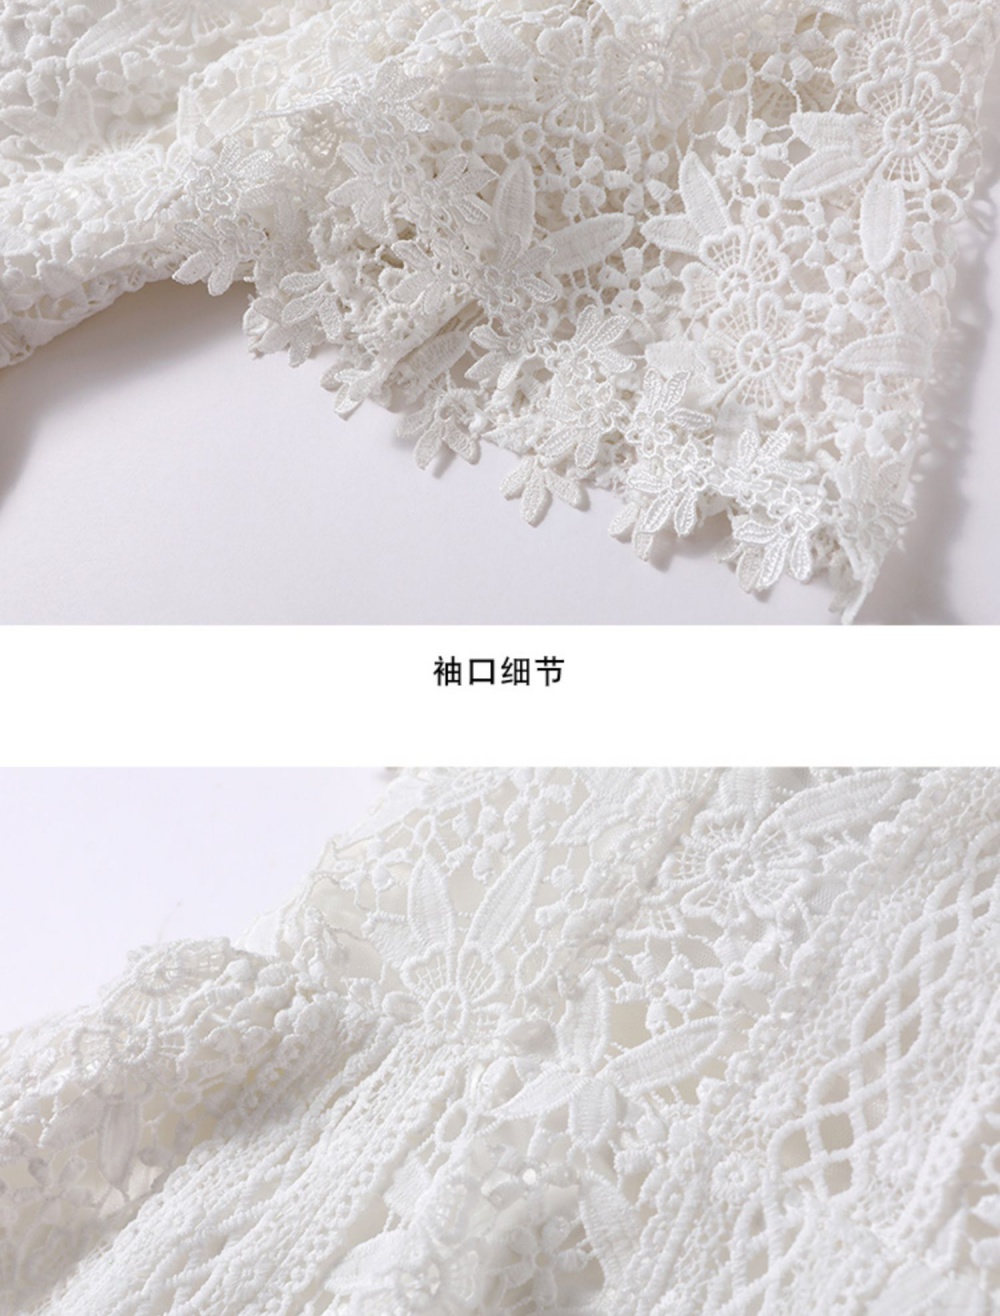 Splice lace formal dress white show high dress